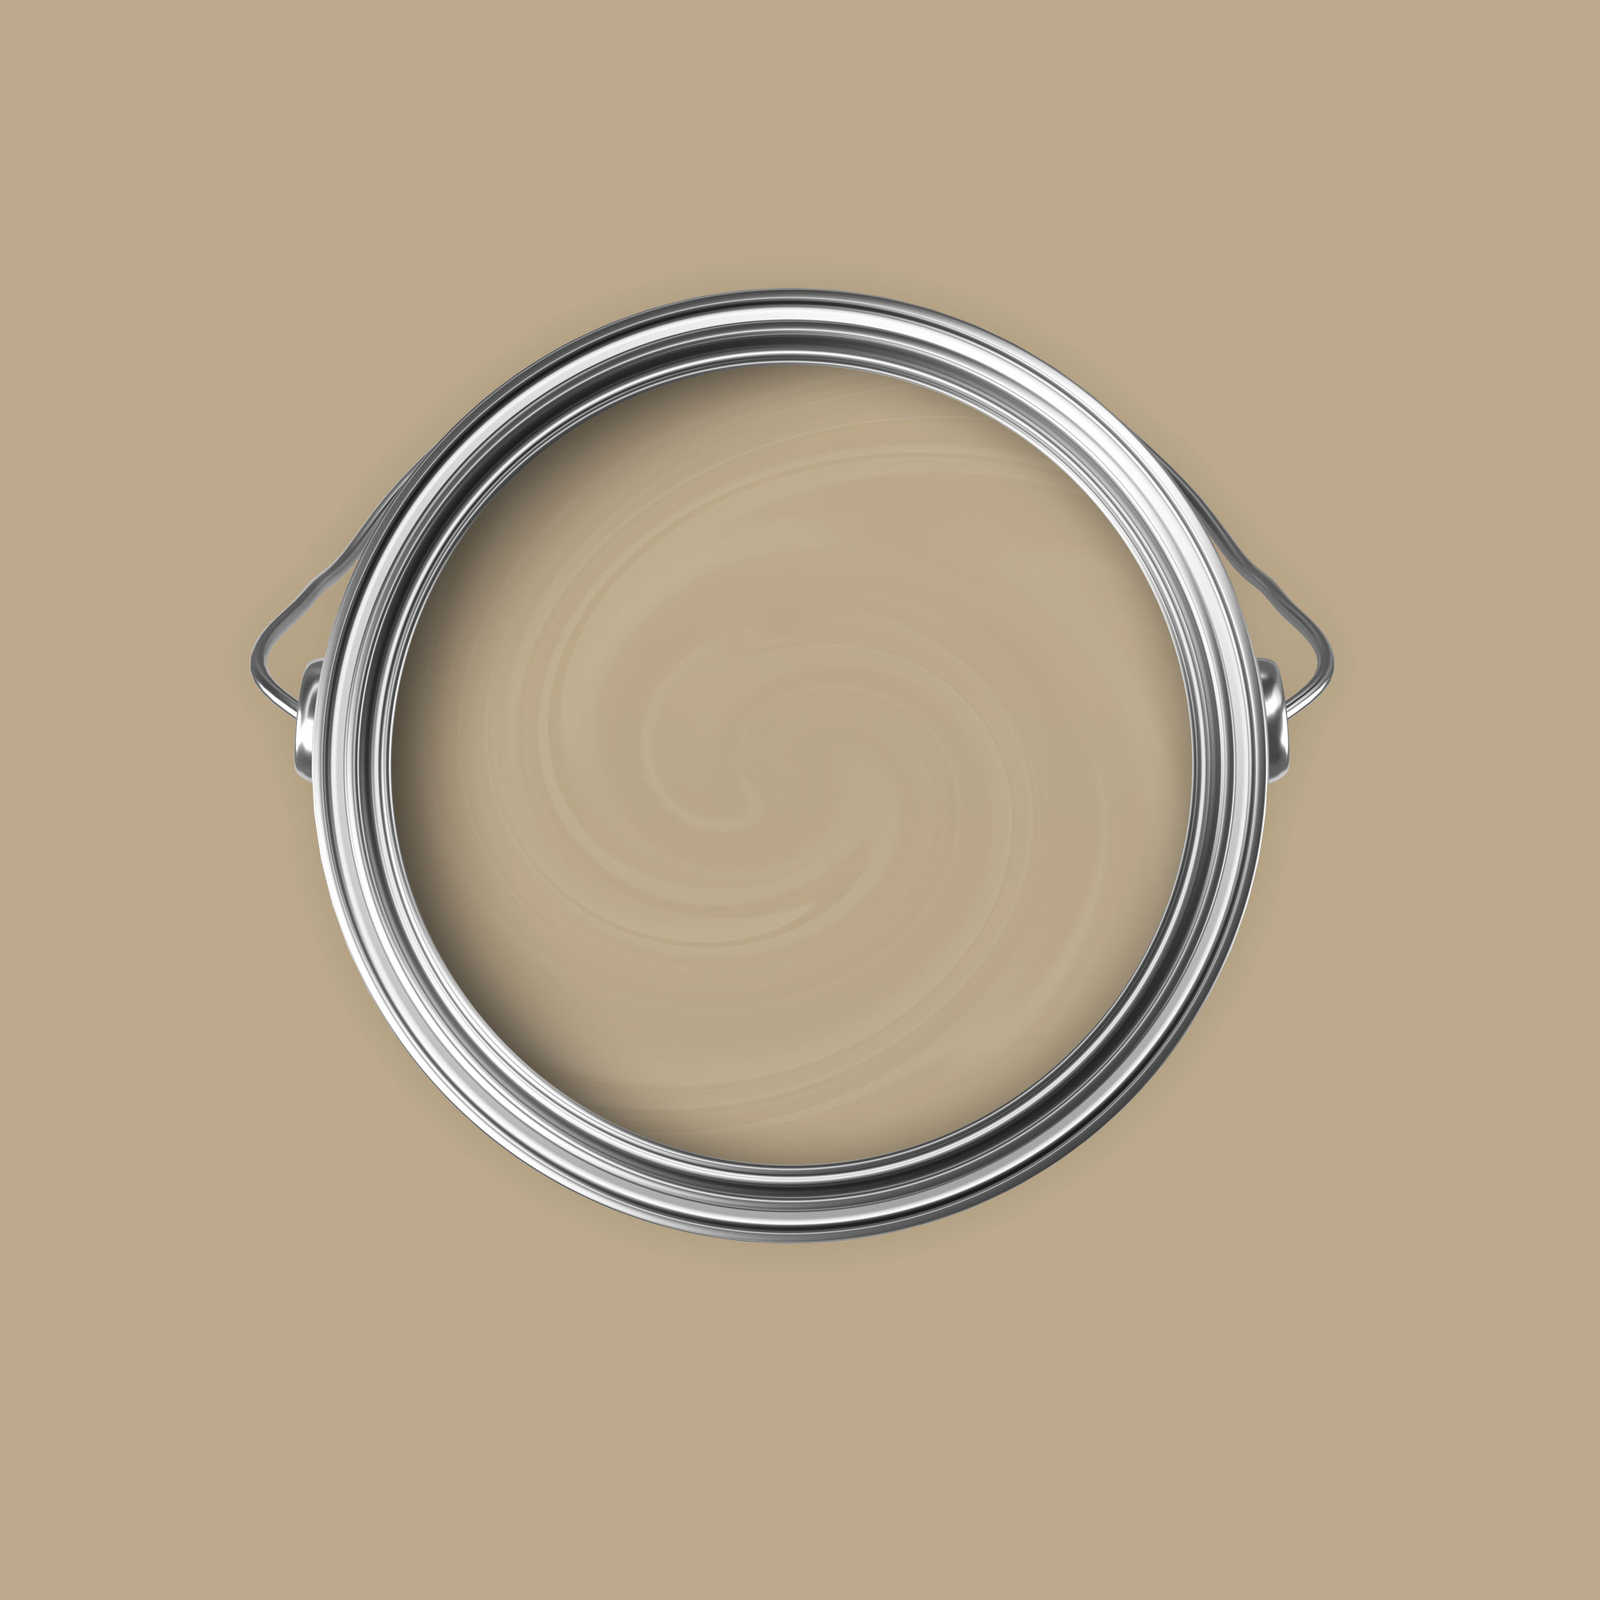             Pintura mural Premium de calidad superior Cappuccino »Essential Earth« NW709 – 5 litro
        